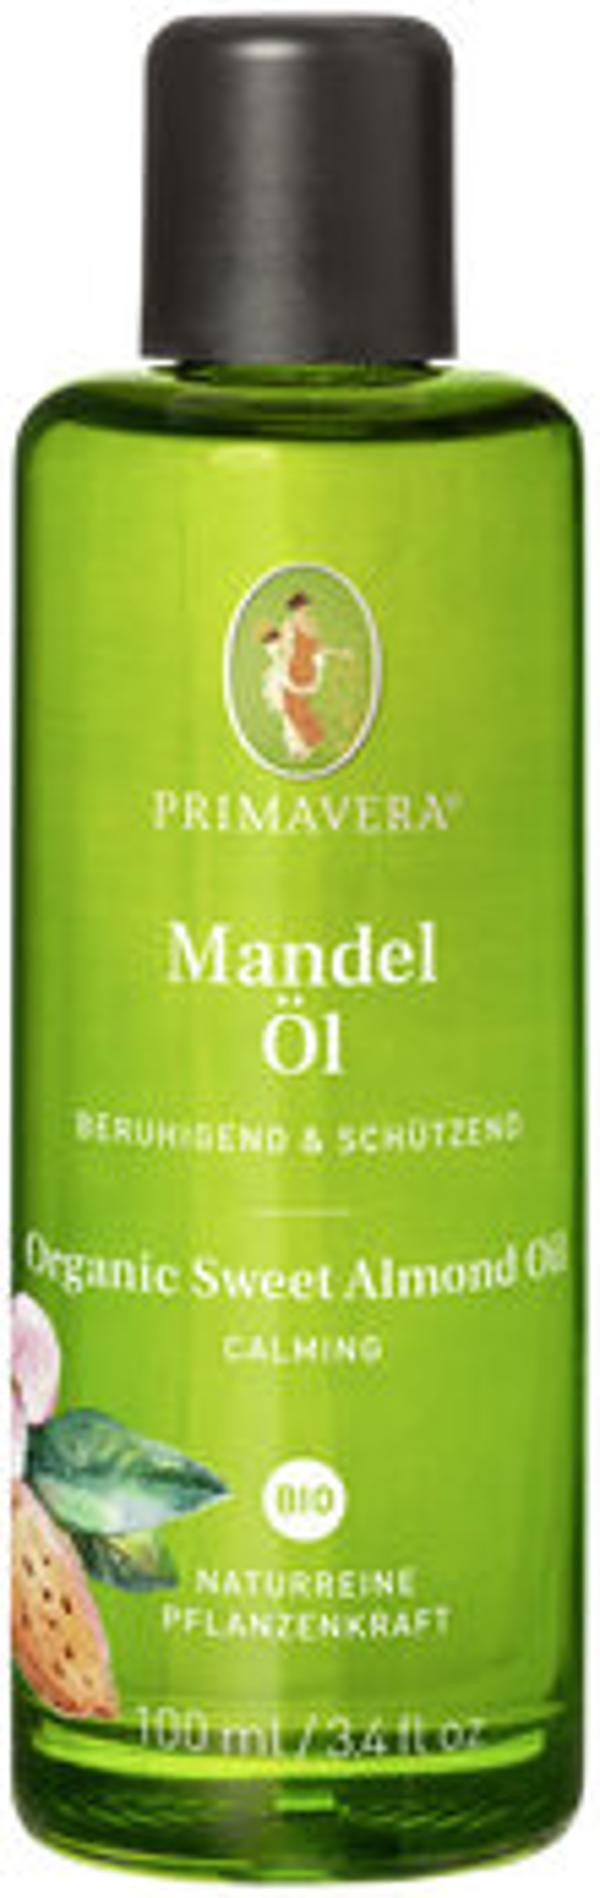 Produktfoto zu Mandelöl, 100 ml